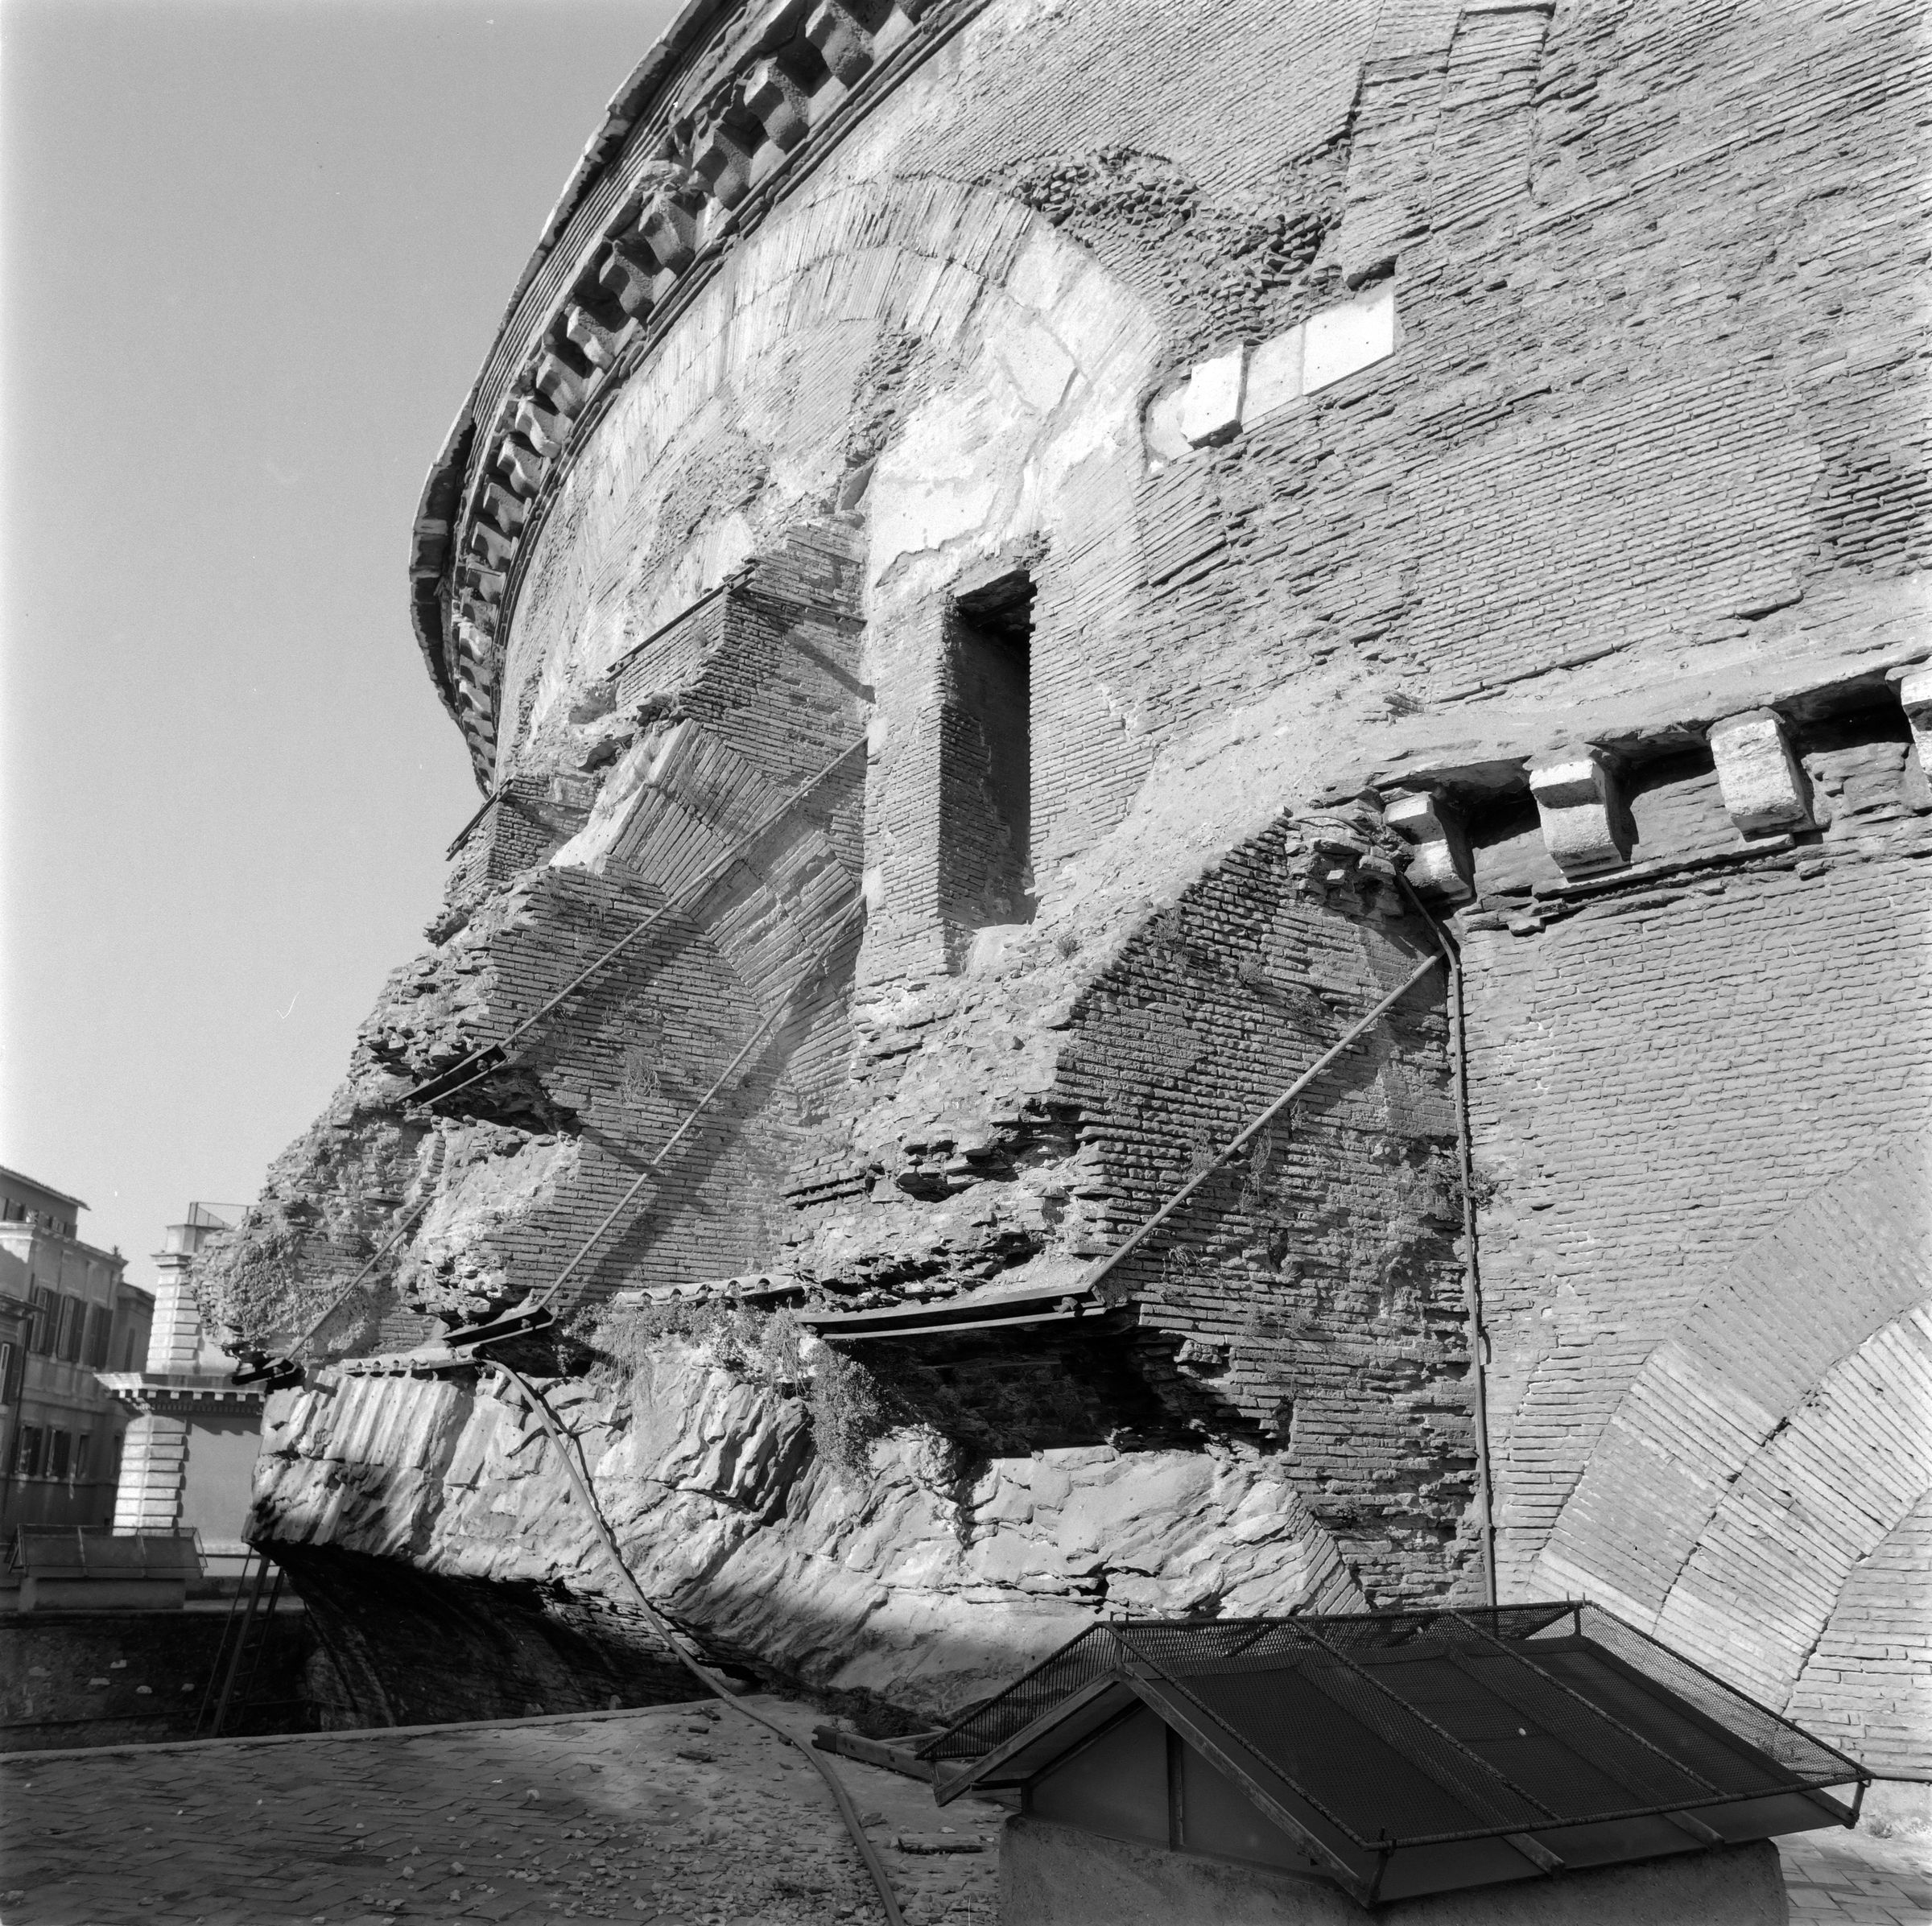 Fotografo non identificato, Pantheon; Pantheon (Chiesa di S. Maria ad Martyres), 1951-2000, gelatina ai sali d'argento, 6x6 cm, N078700